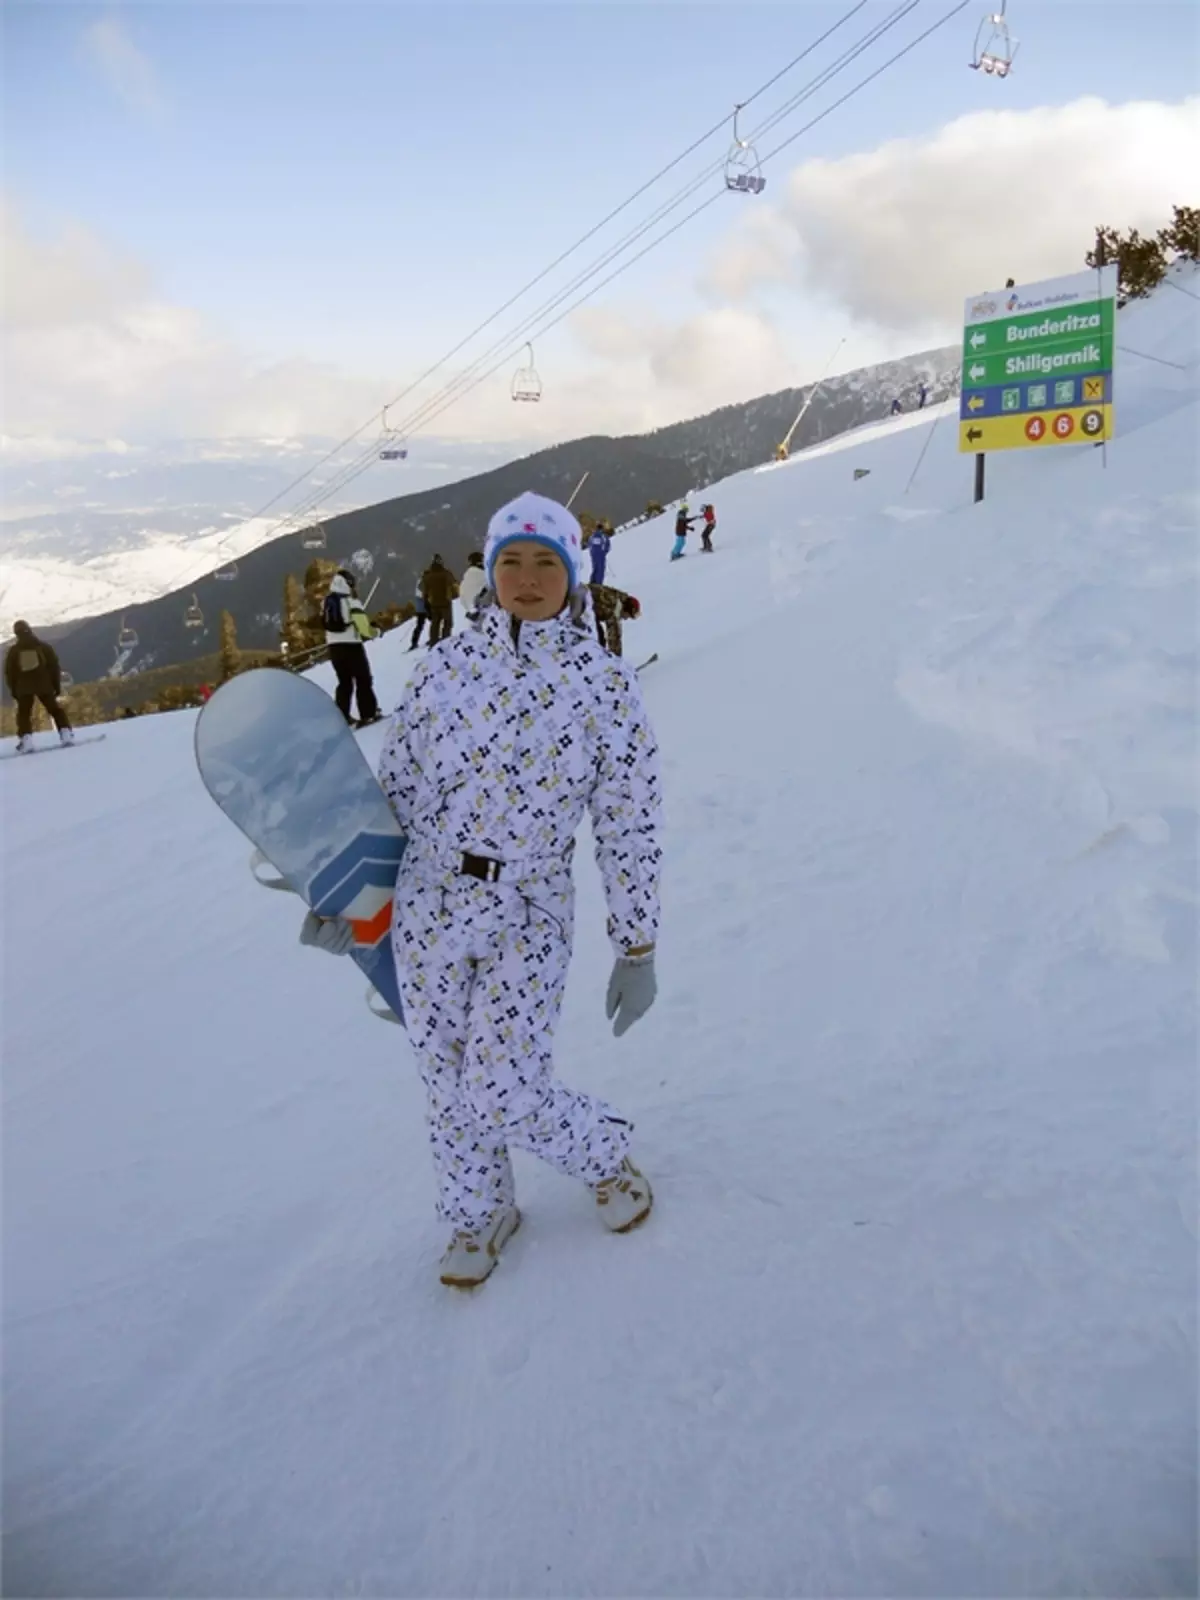 Botas de Snowboard (119 fotos): Como escolher botas de snowboard para mulheres, modelo Nike, Adidas e outras marcas populares 15127_42